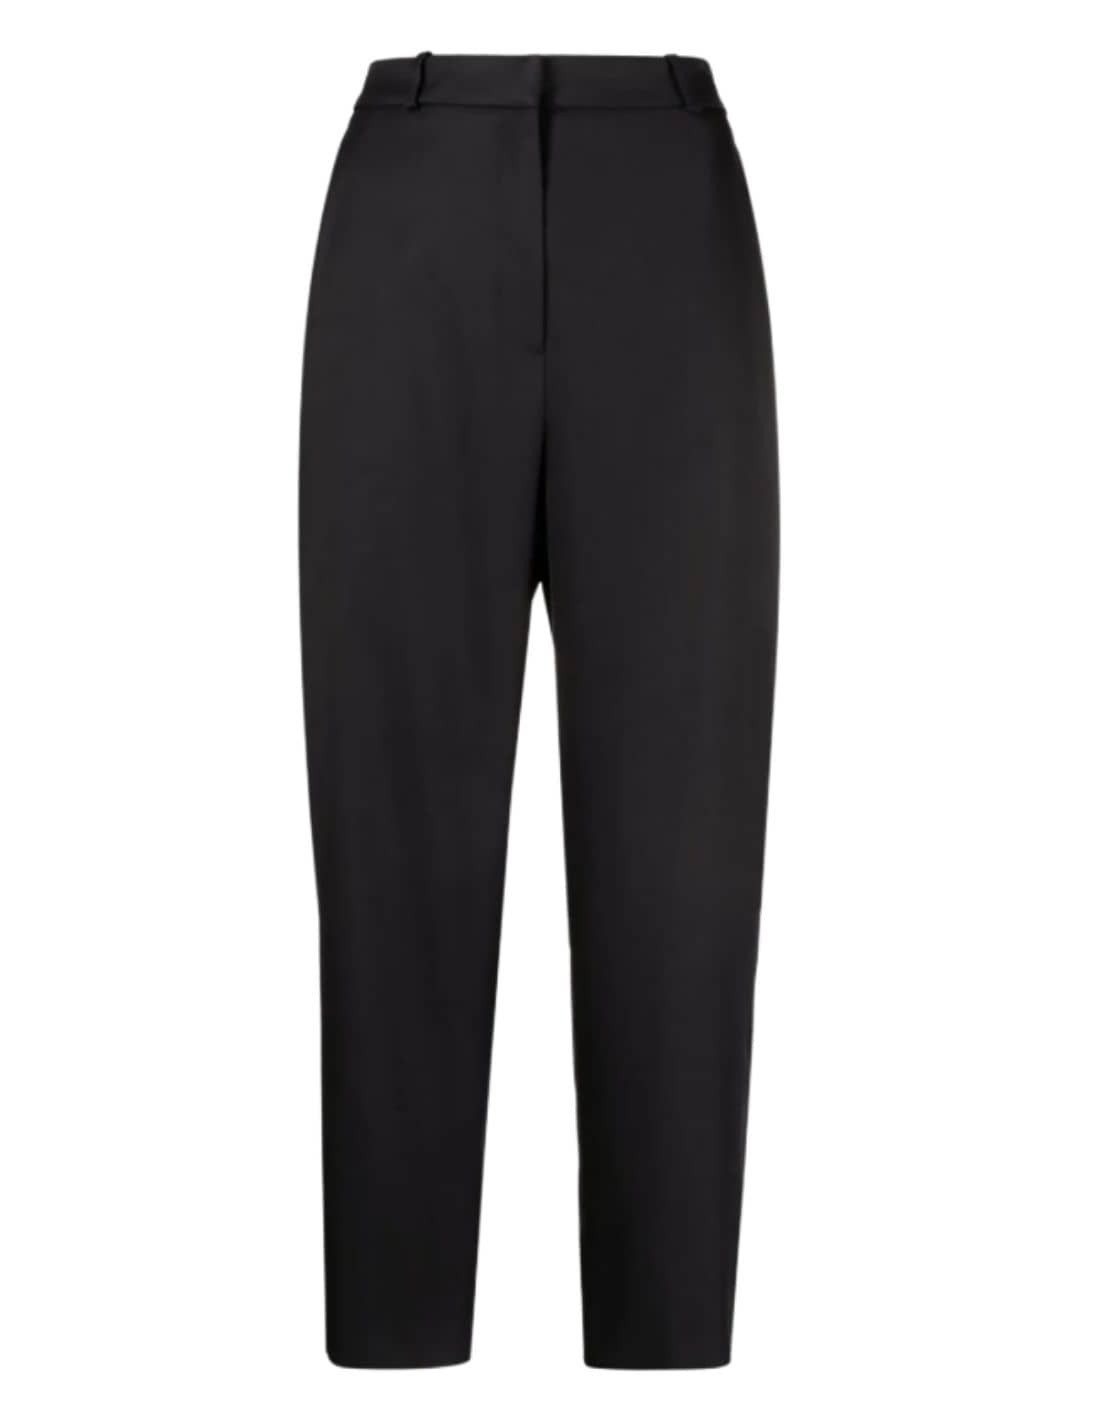 TOTËME signature pants in black viscose for women - SS21